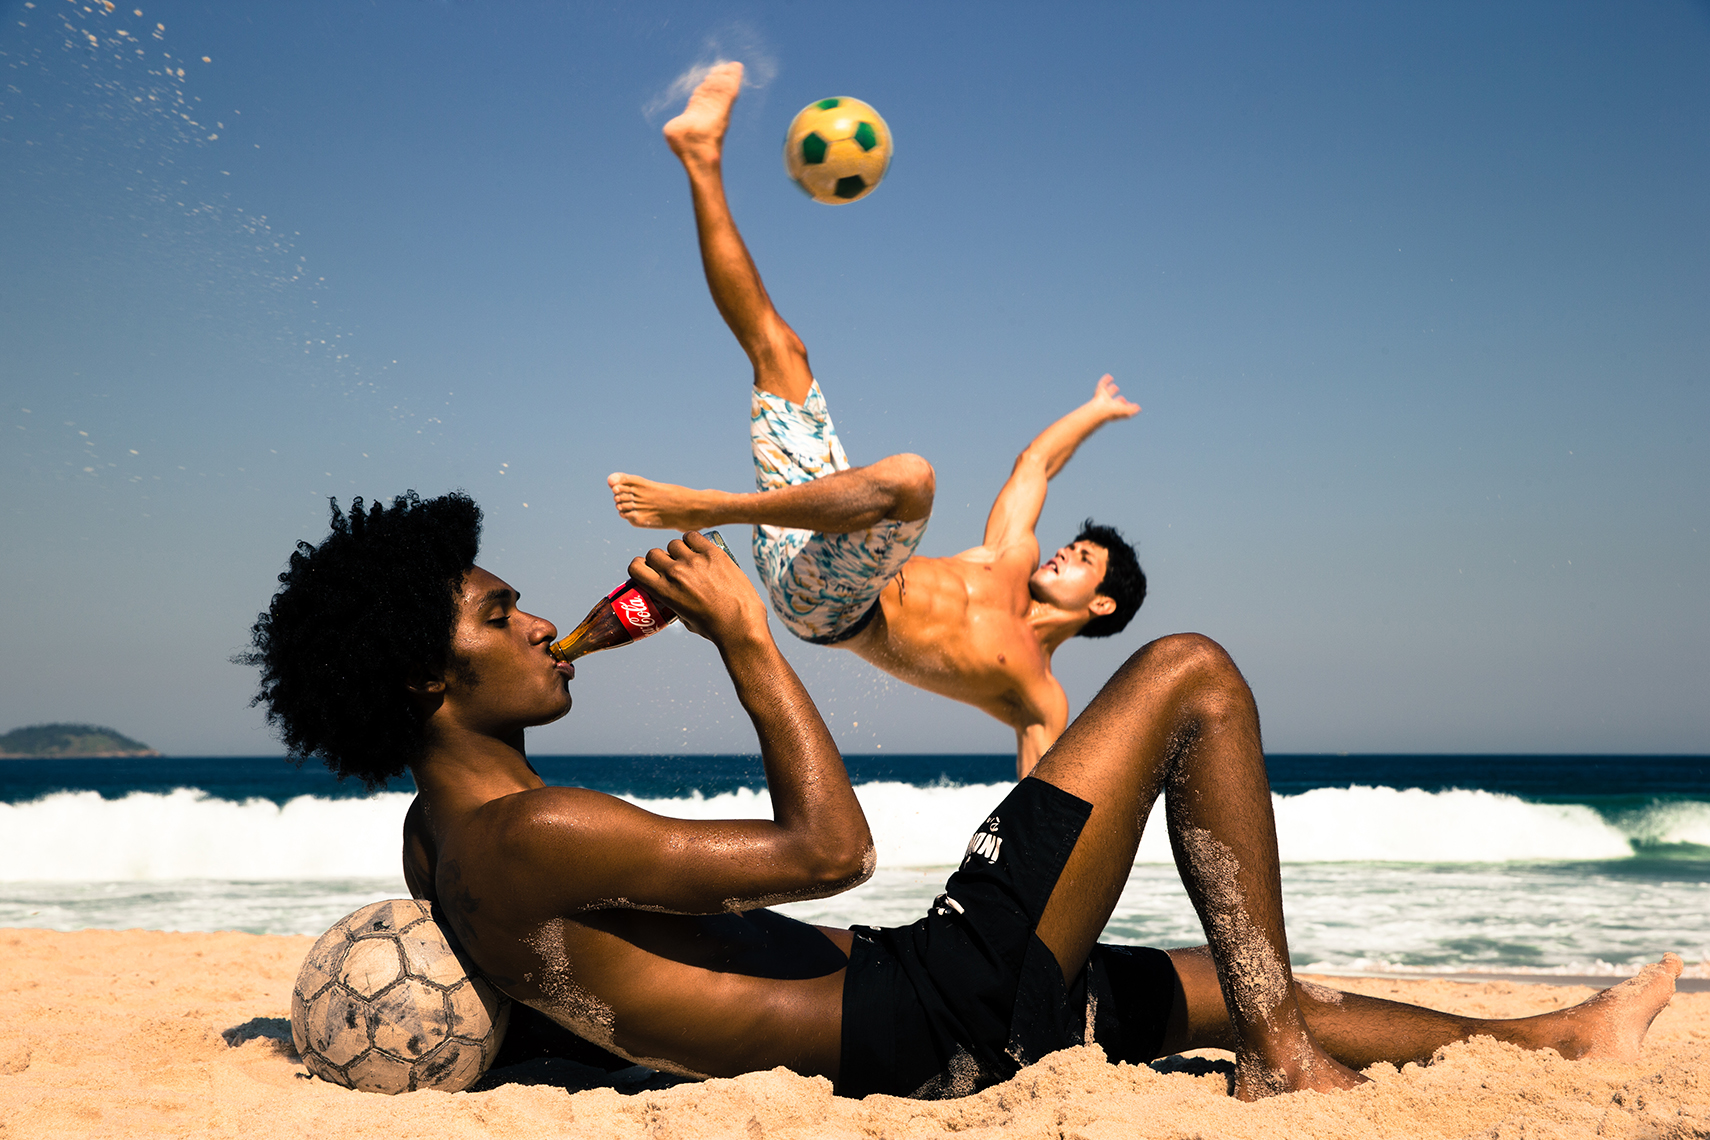 Reinsdorf-Advertising-Coke-Lifestyle-Brazil-World-Cup-Action_001